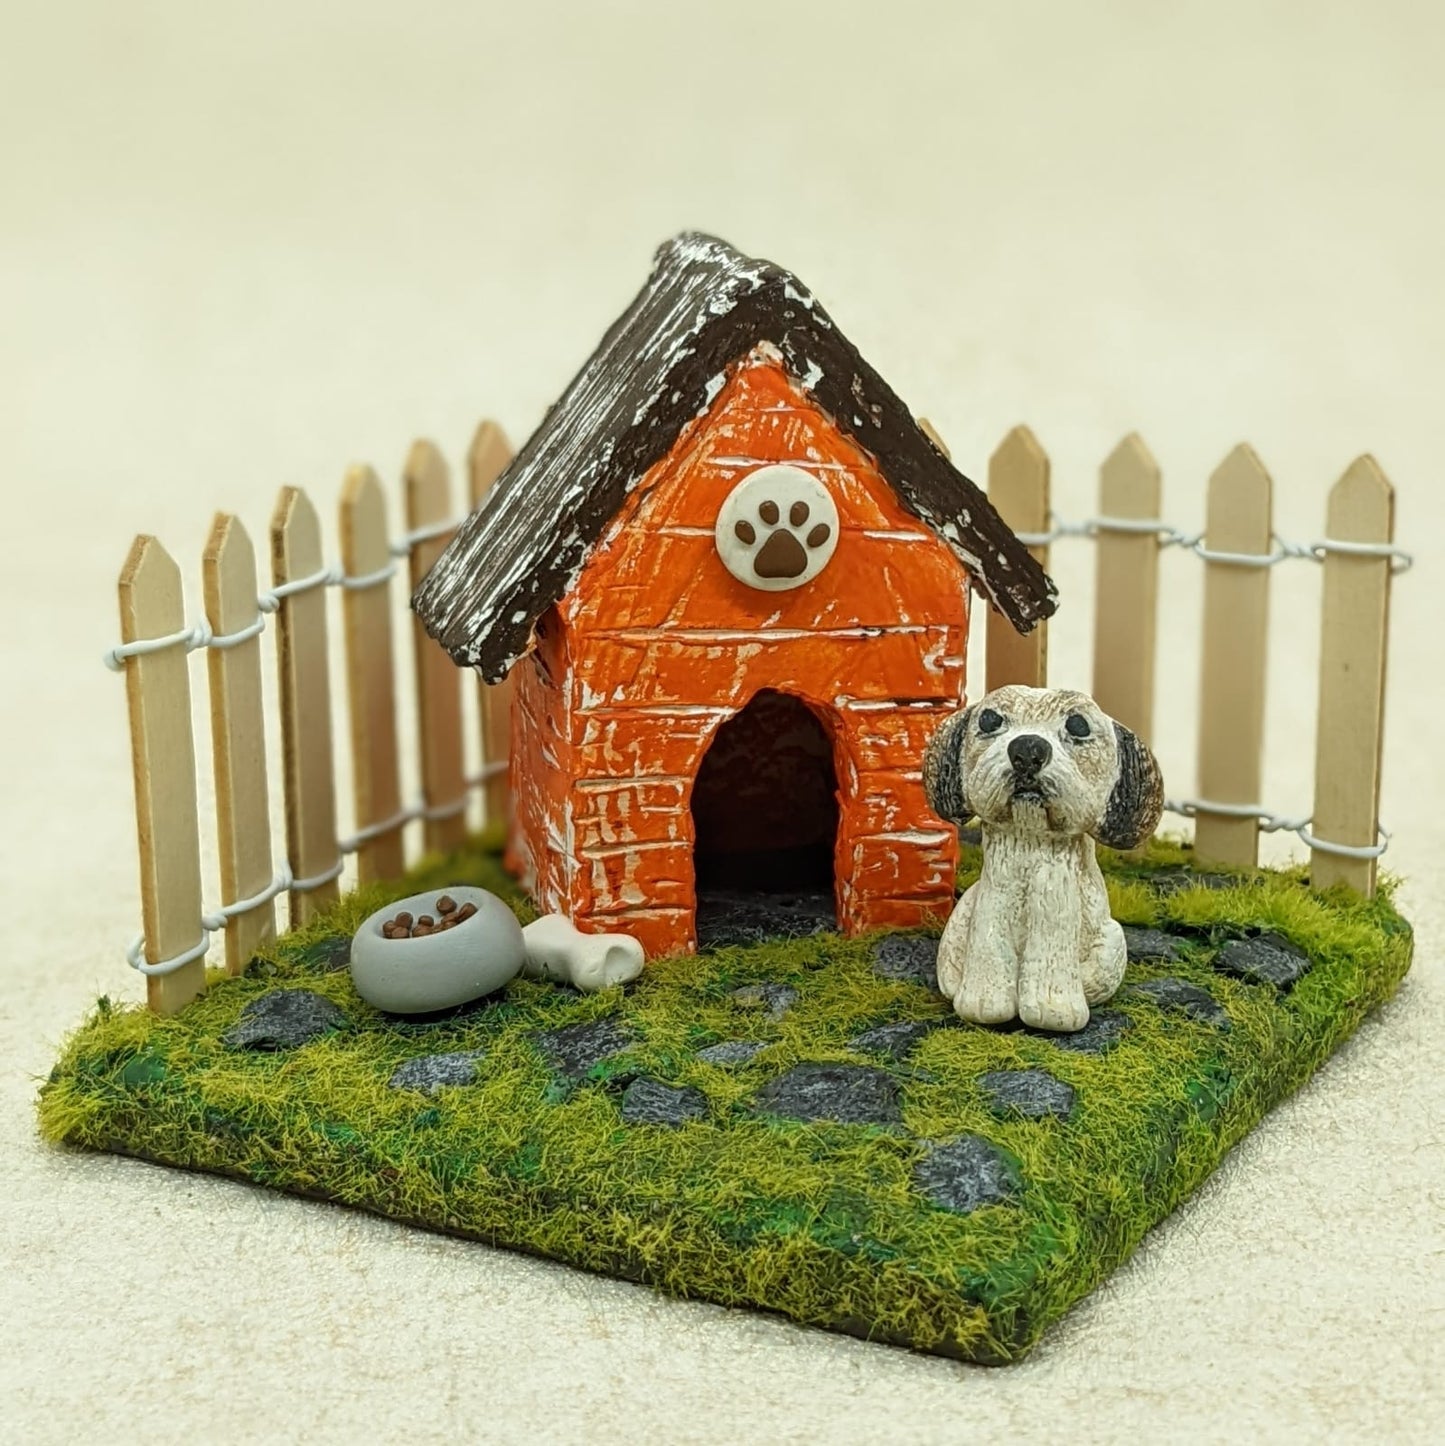 Little pup's house